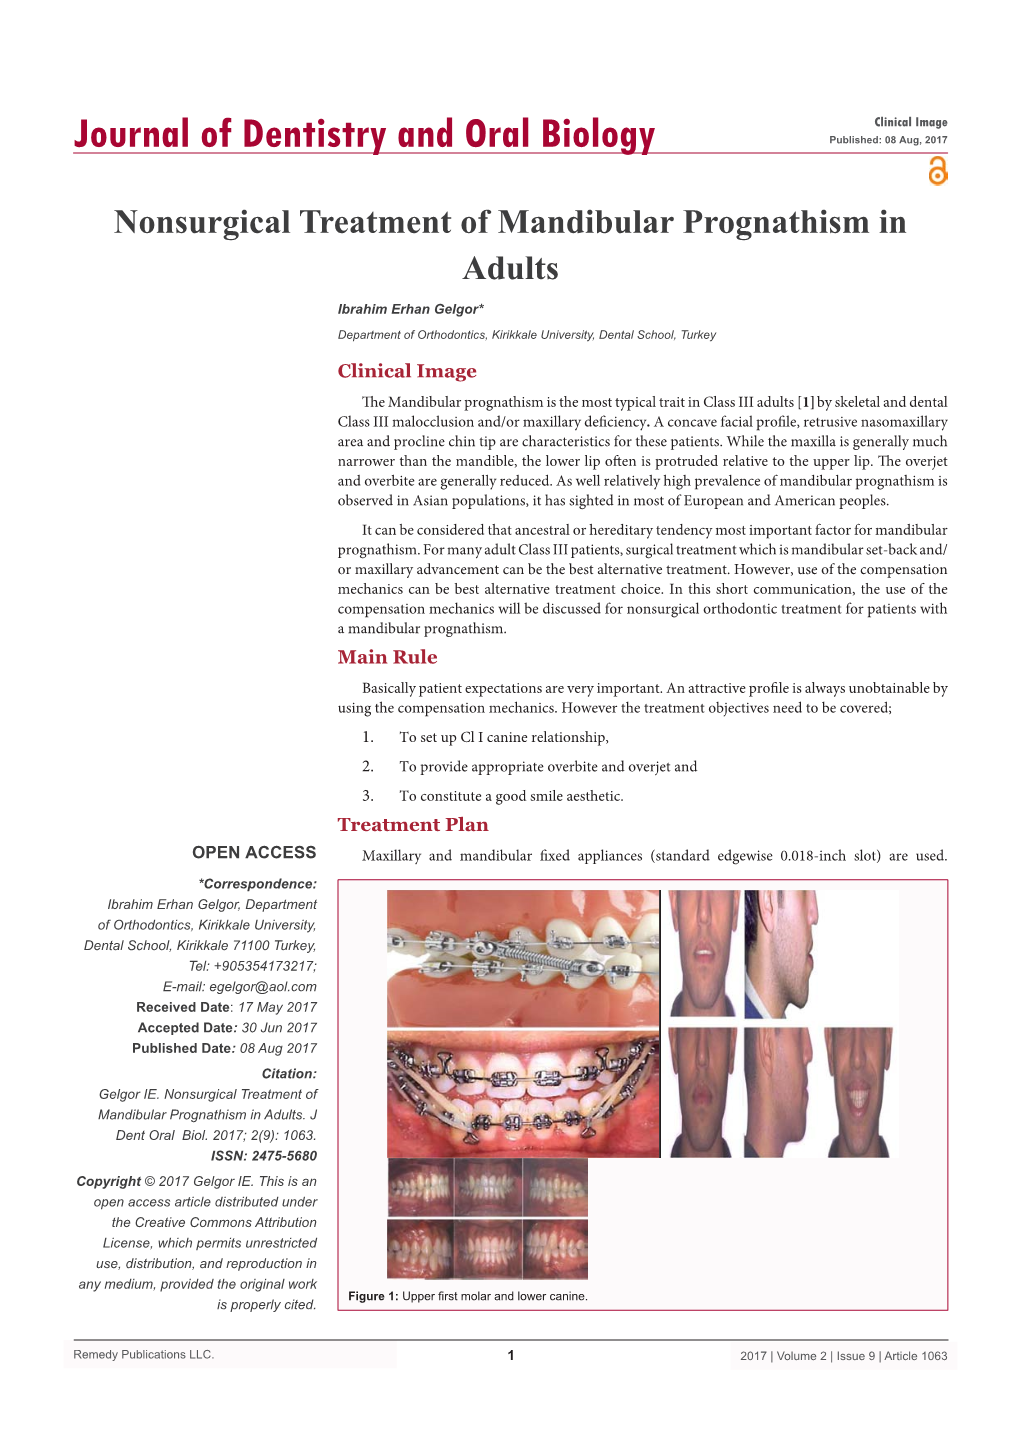 Nonsurgical Treatment of Mandibular Prognathism in Adults